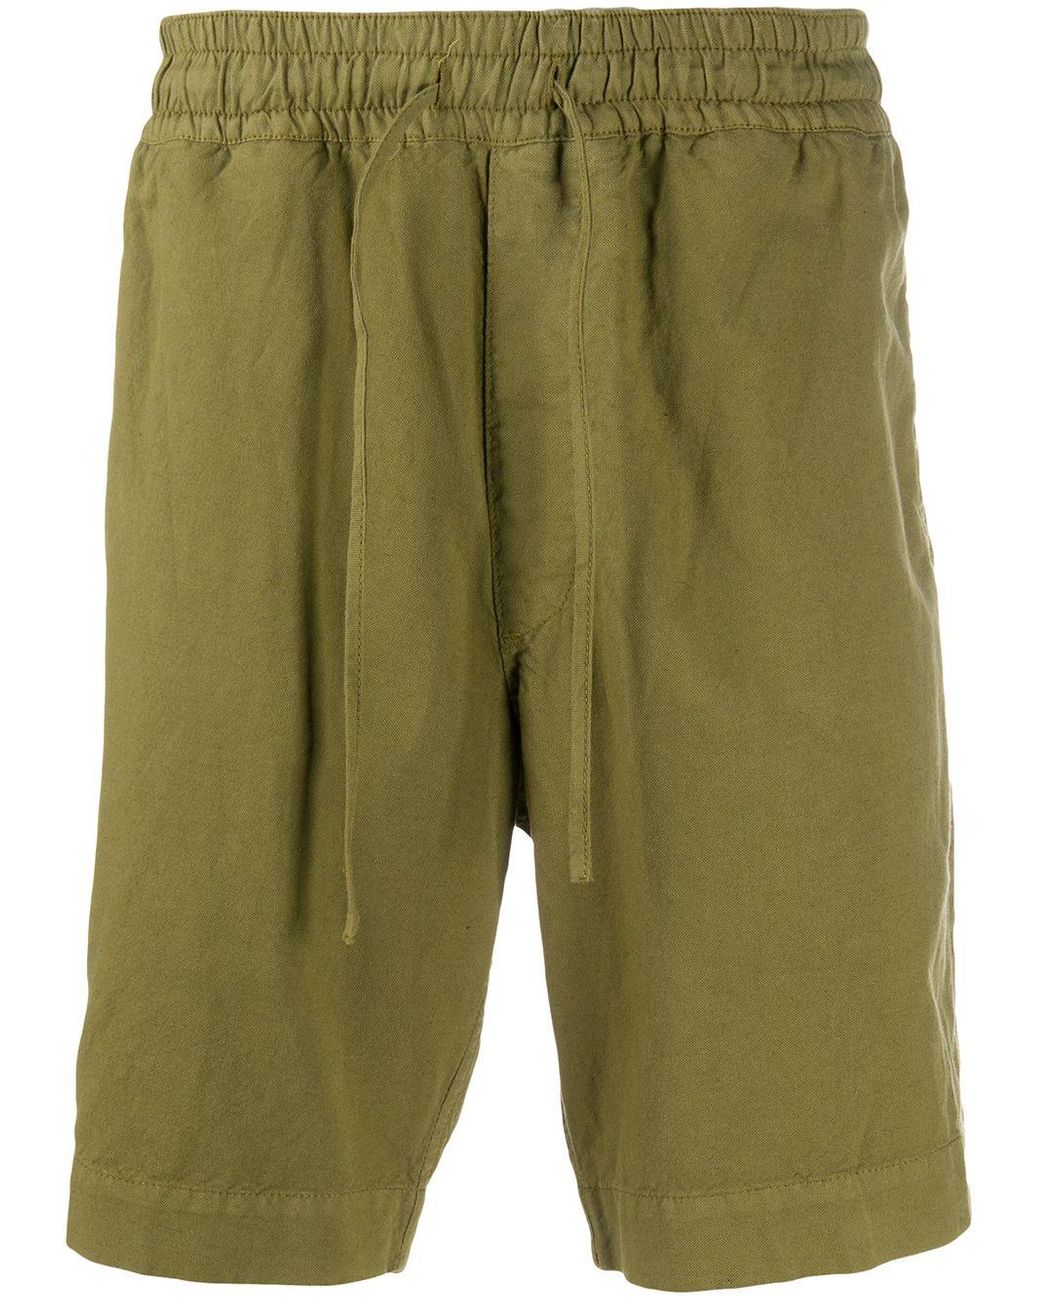 YMC Cotton Drawstring Shorts in Green for Men - Lyst